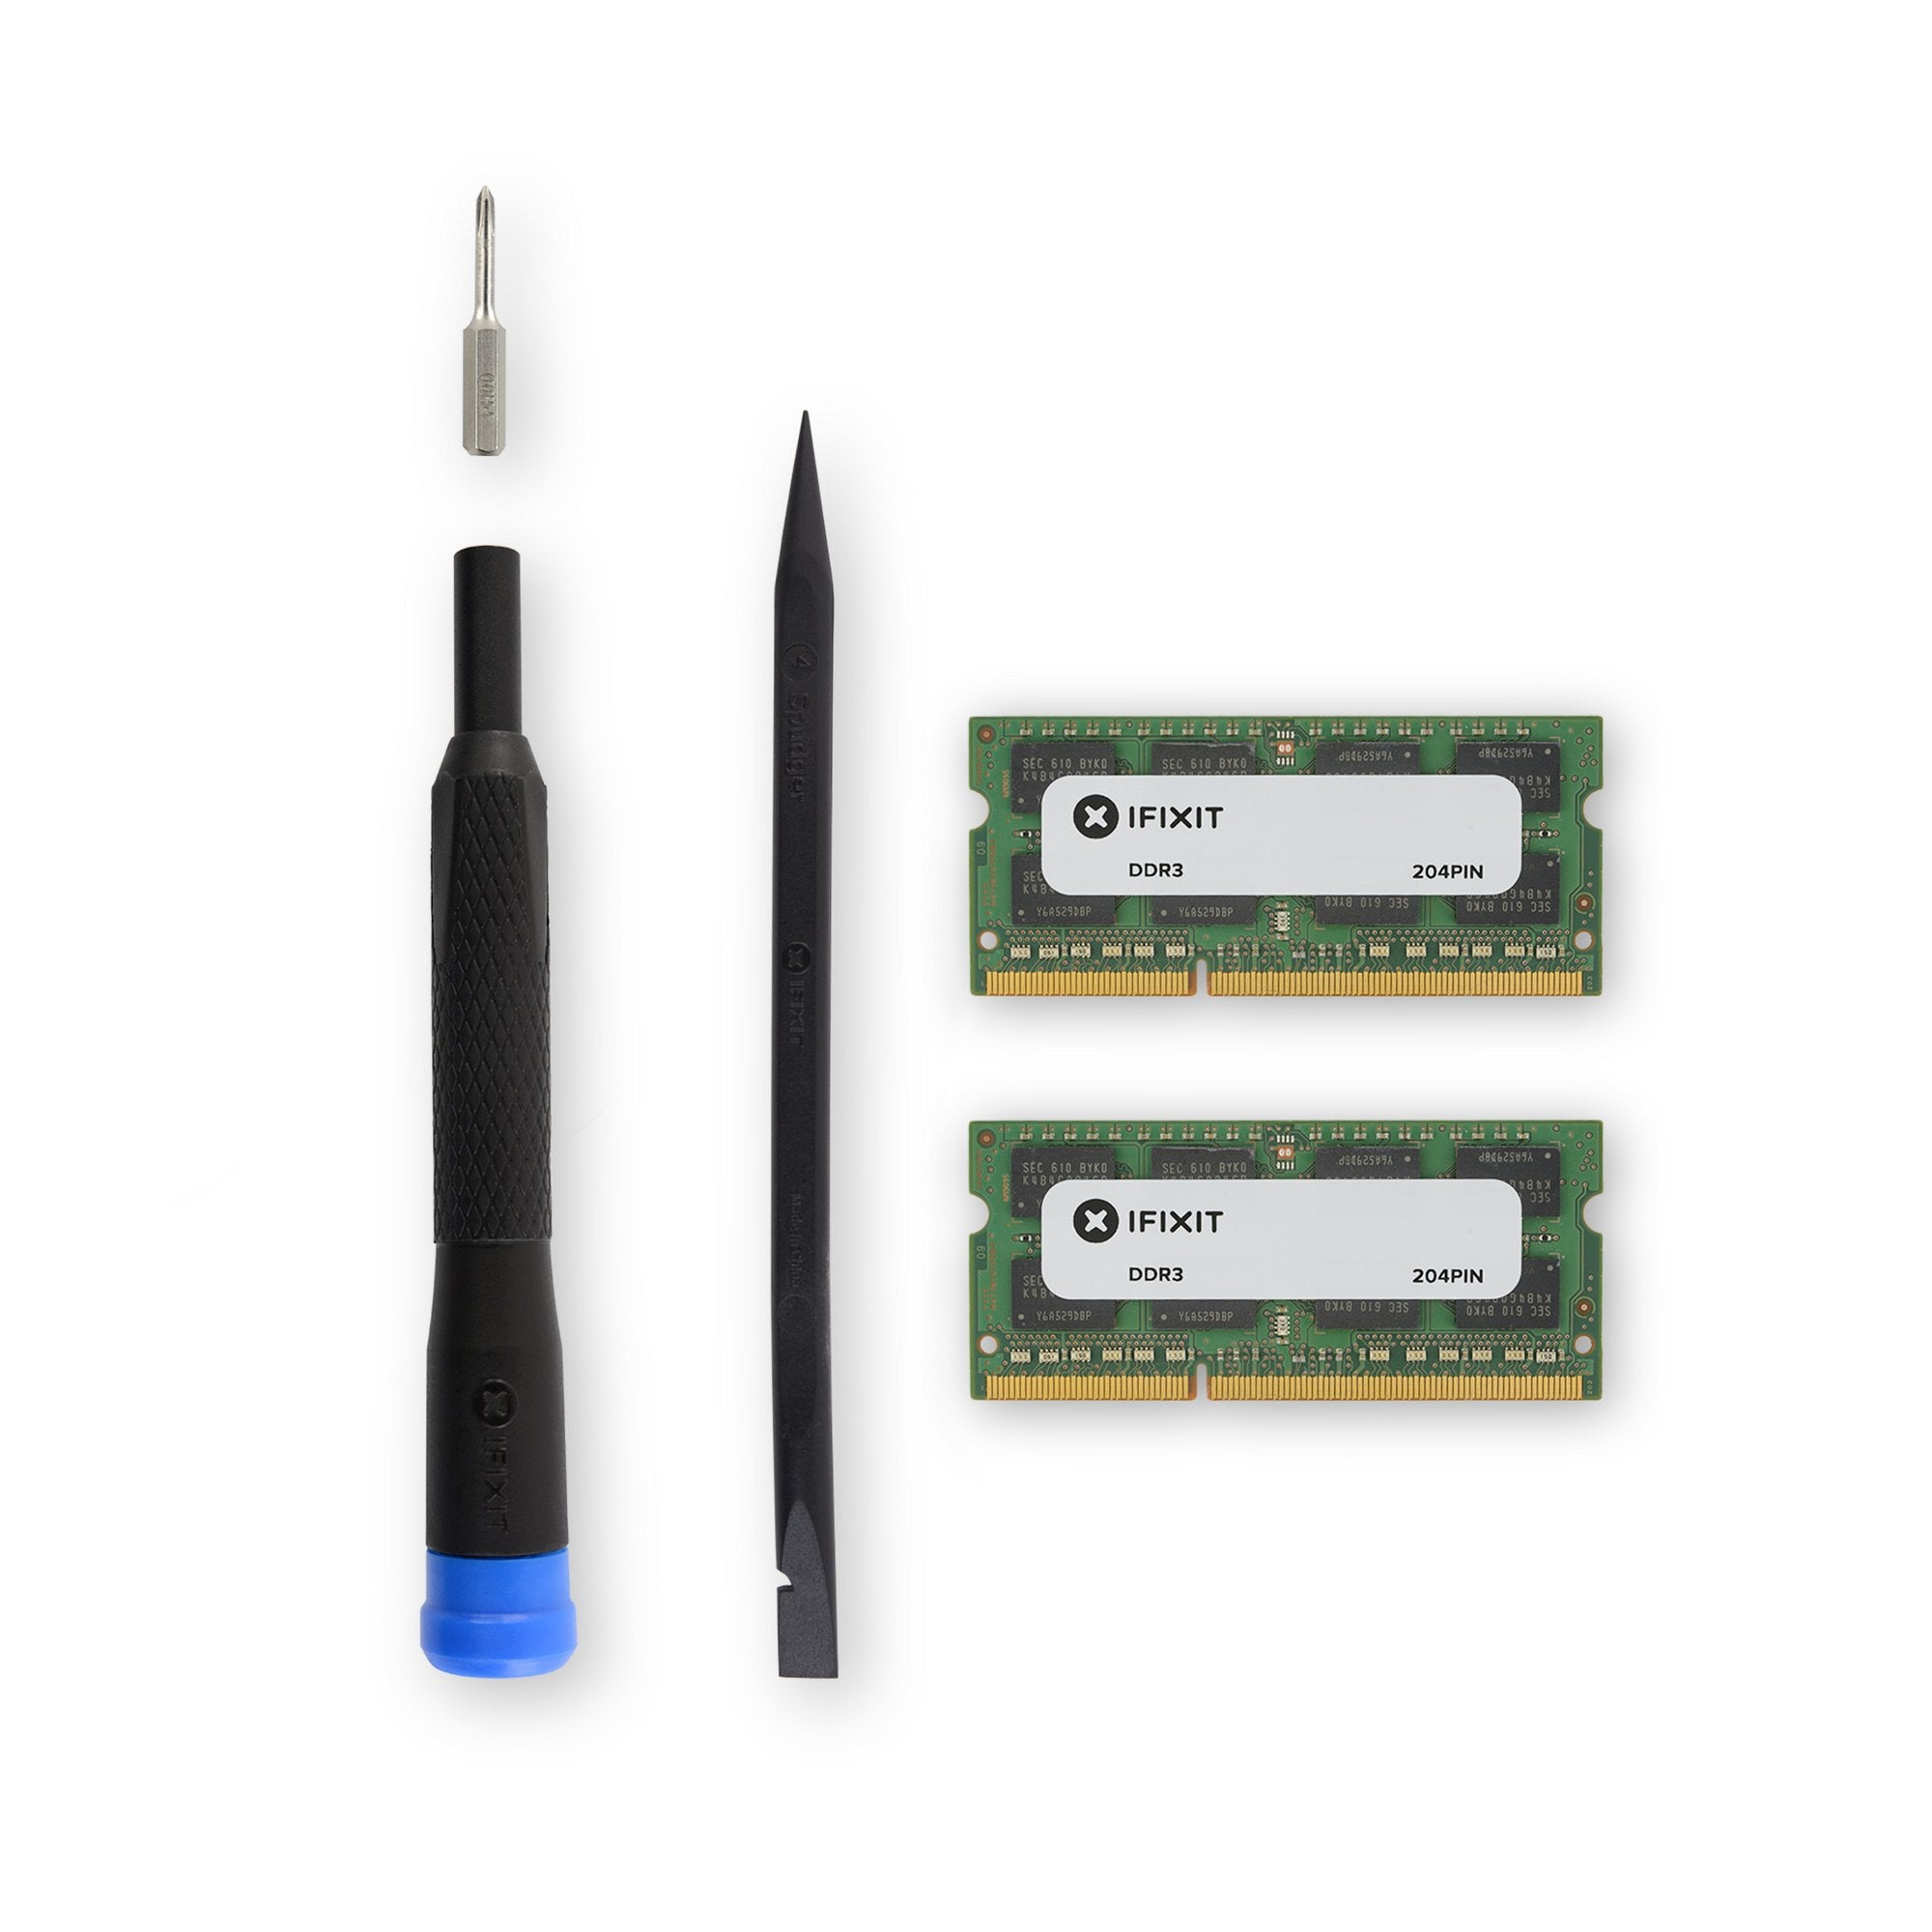 MacBook Pro 17" Unibody (Mid 2010) Memory Maxxer RAM Upgrade Kit